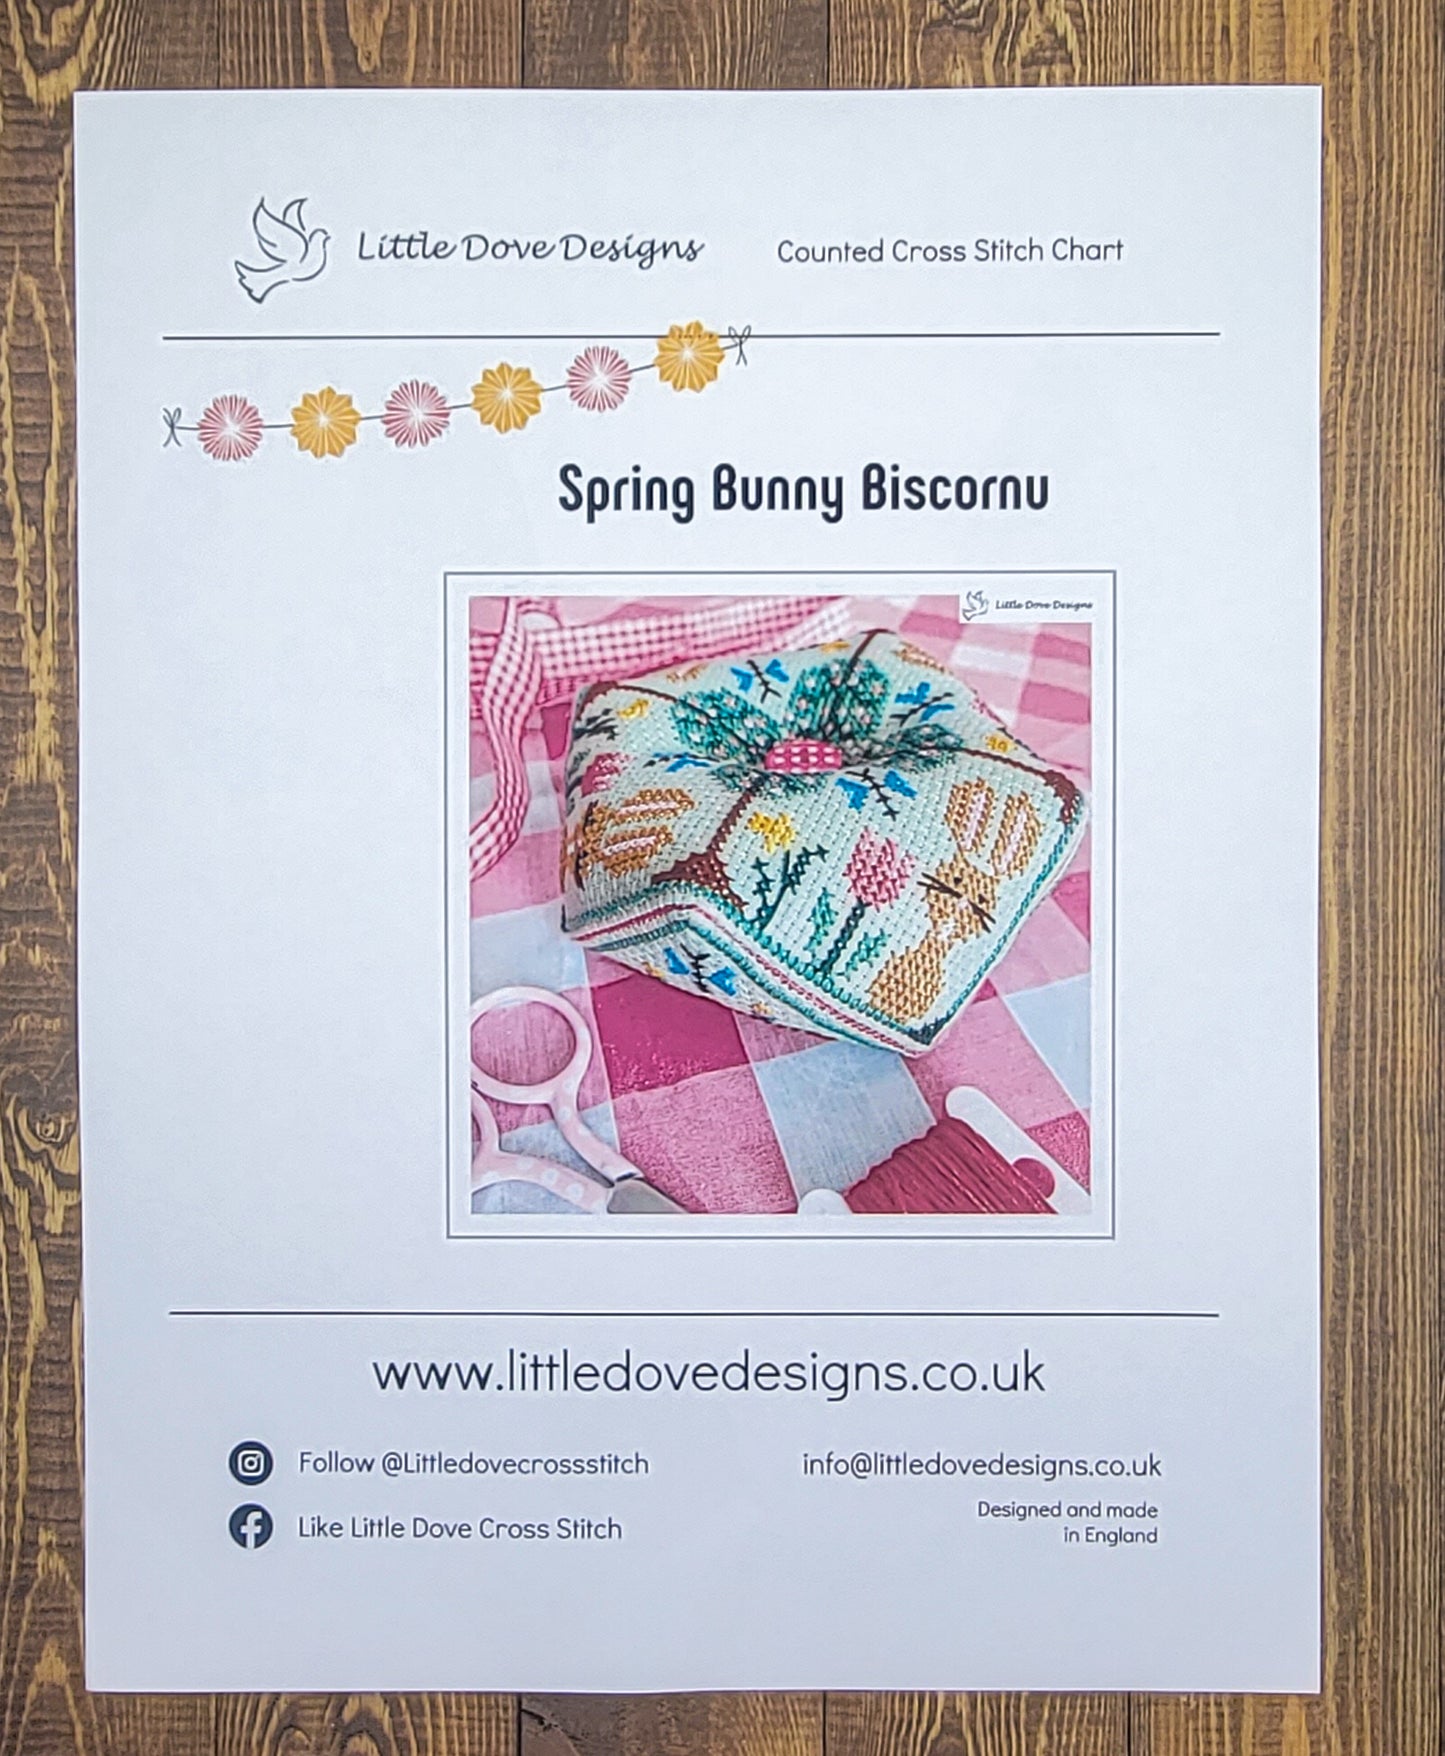 Spring Bunny Biscornu by Little Dove Designs